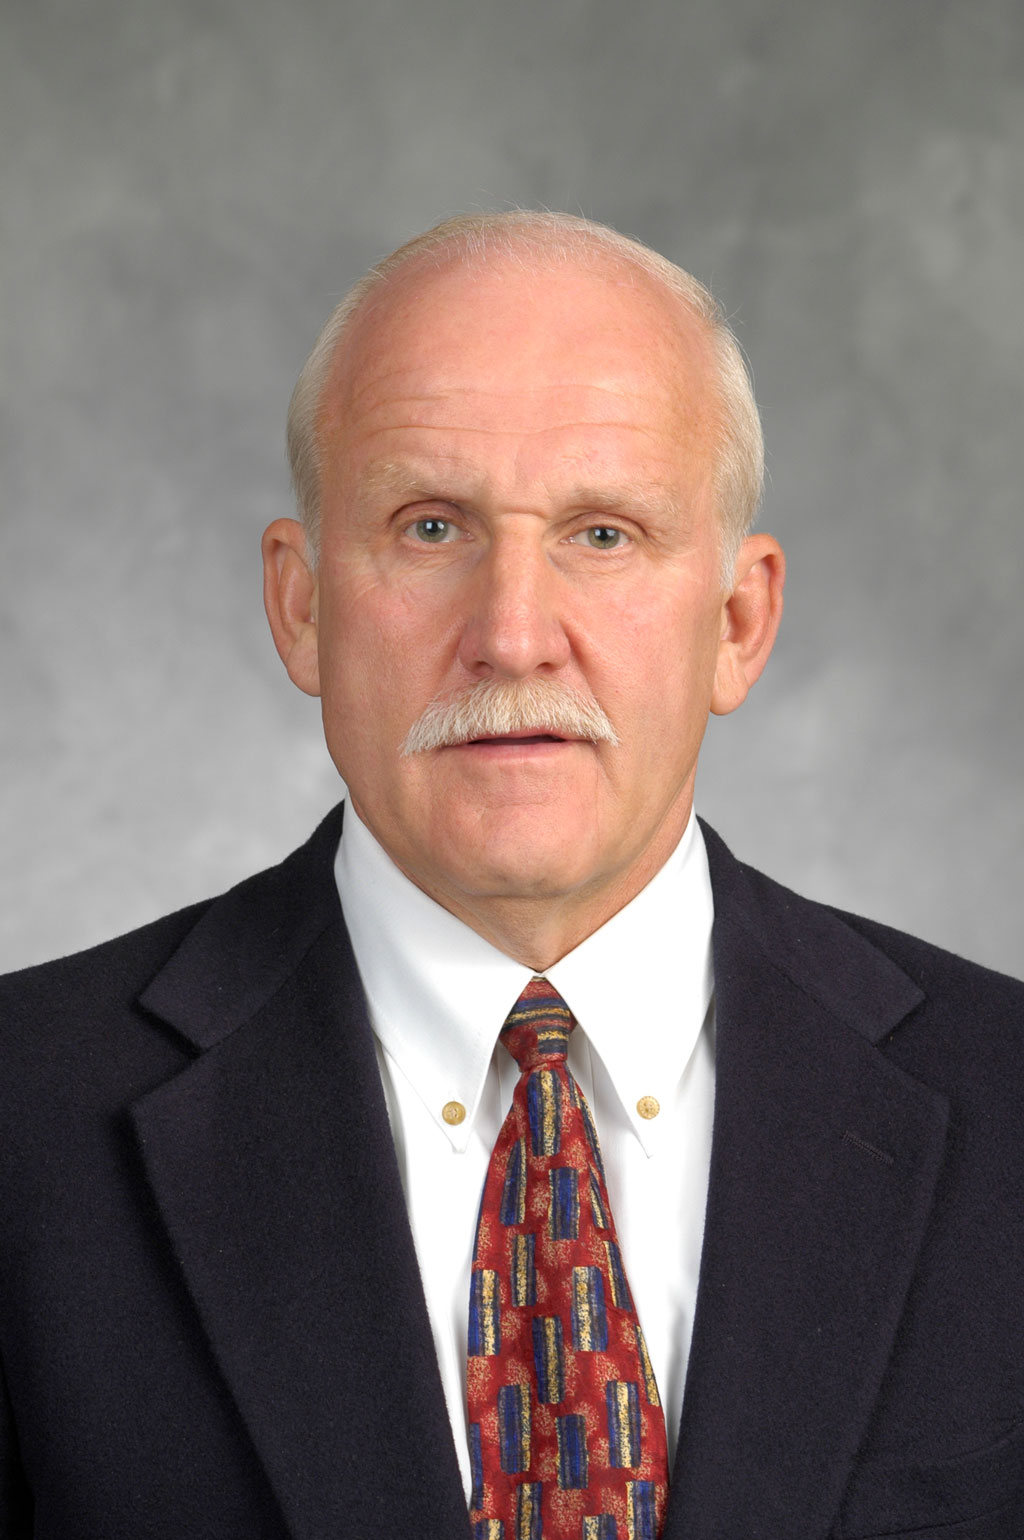 Jim Koch